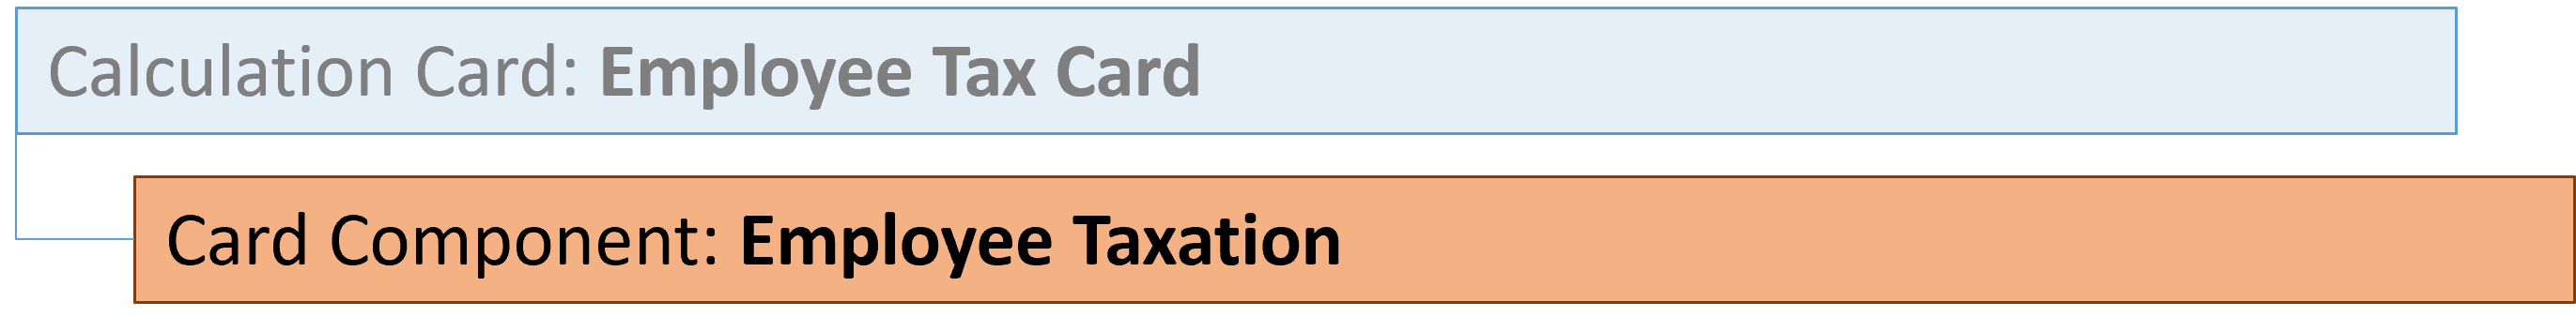 employee tax card employee taxation card component